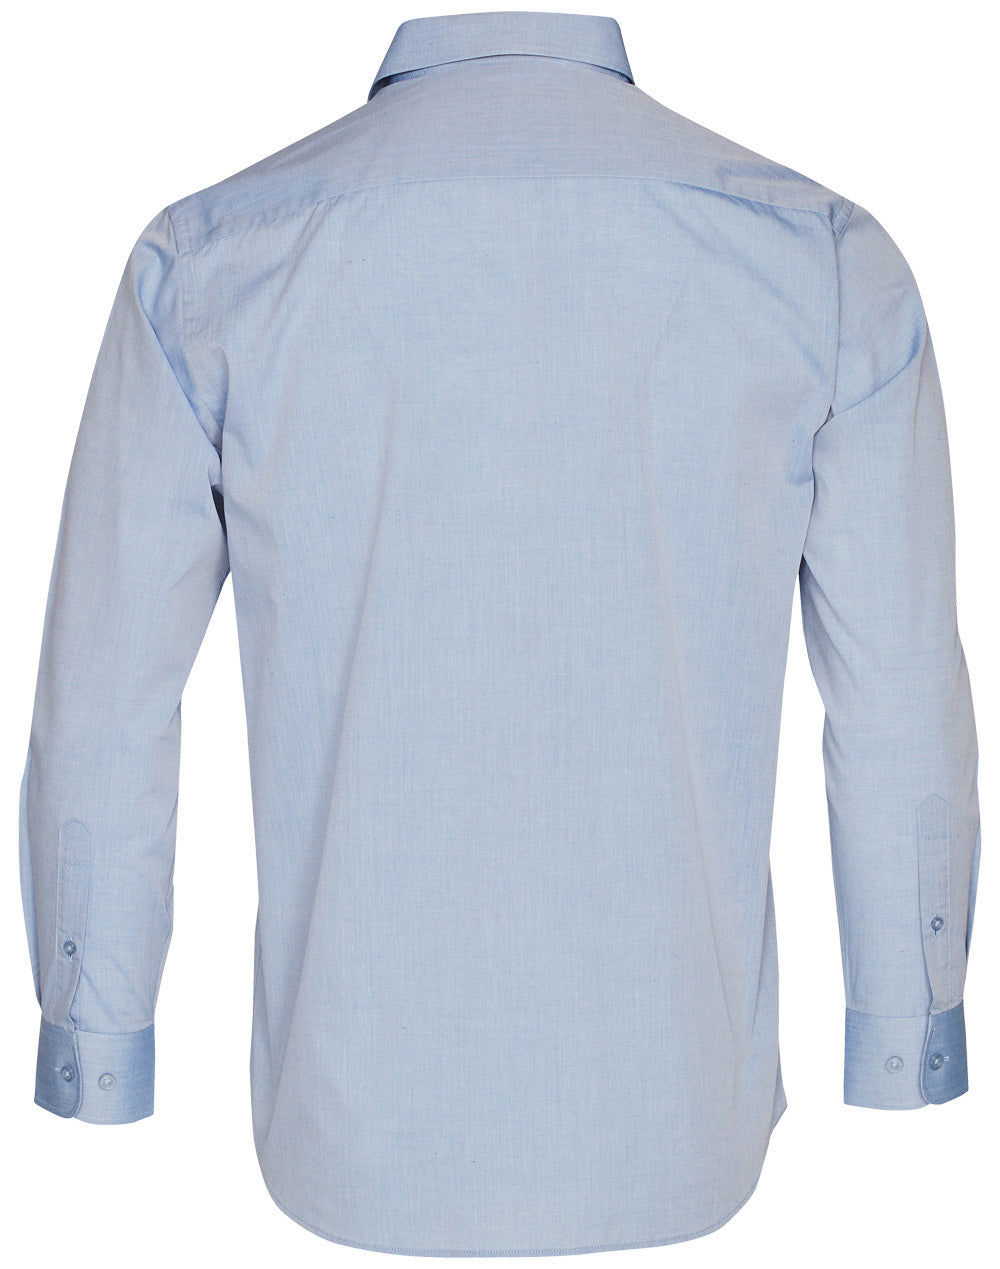 Benchmark M7012 Men's Fine Chambray Long Sleeve Shirt